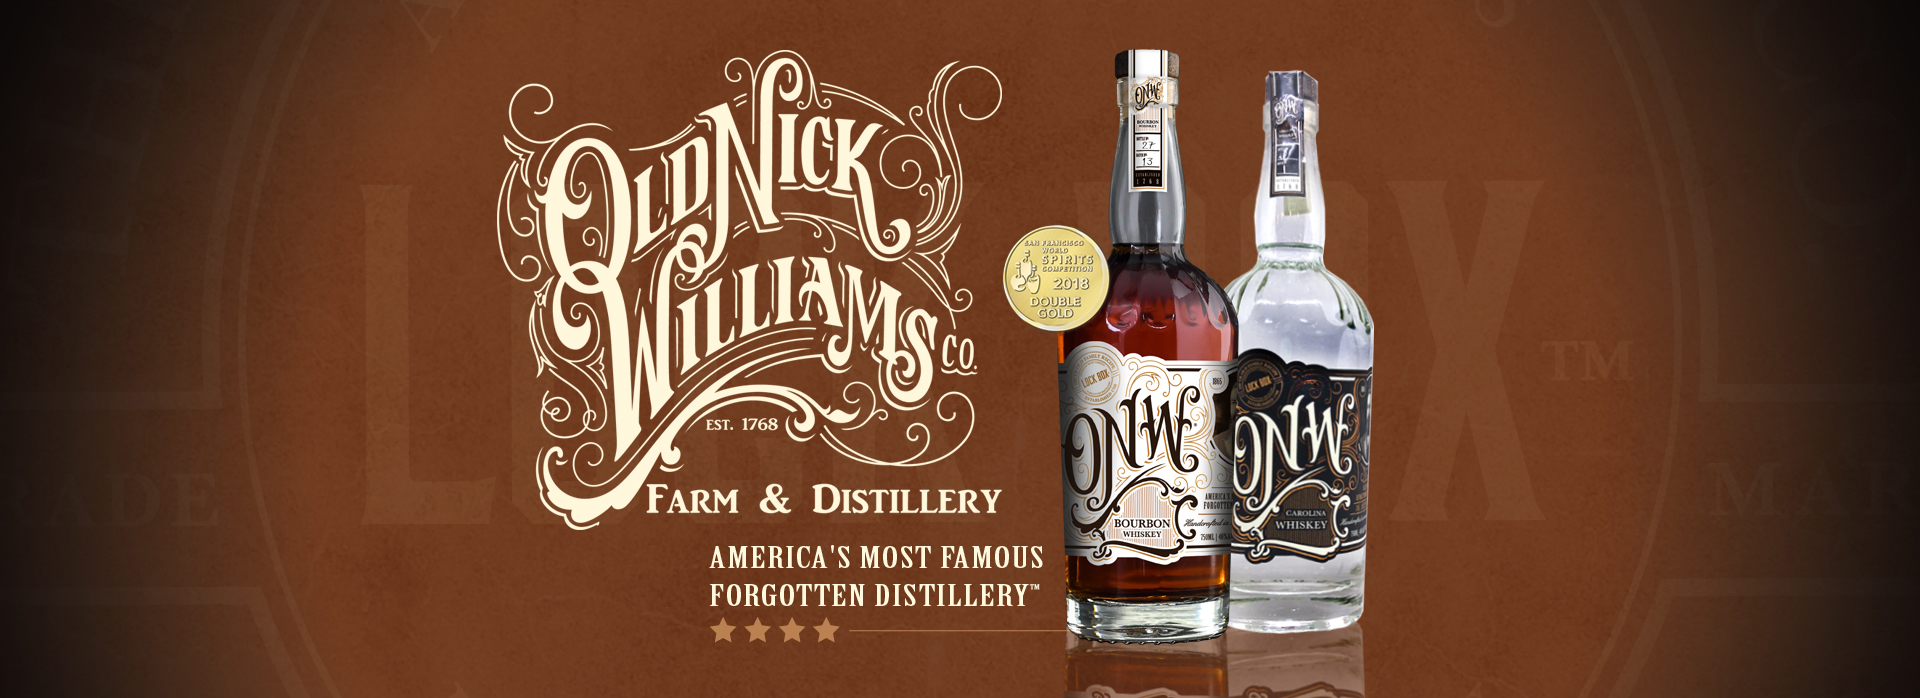 Old Nick Williams Distillery